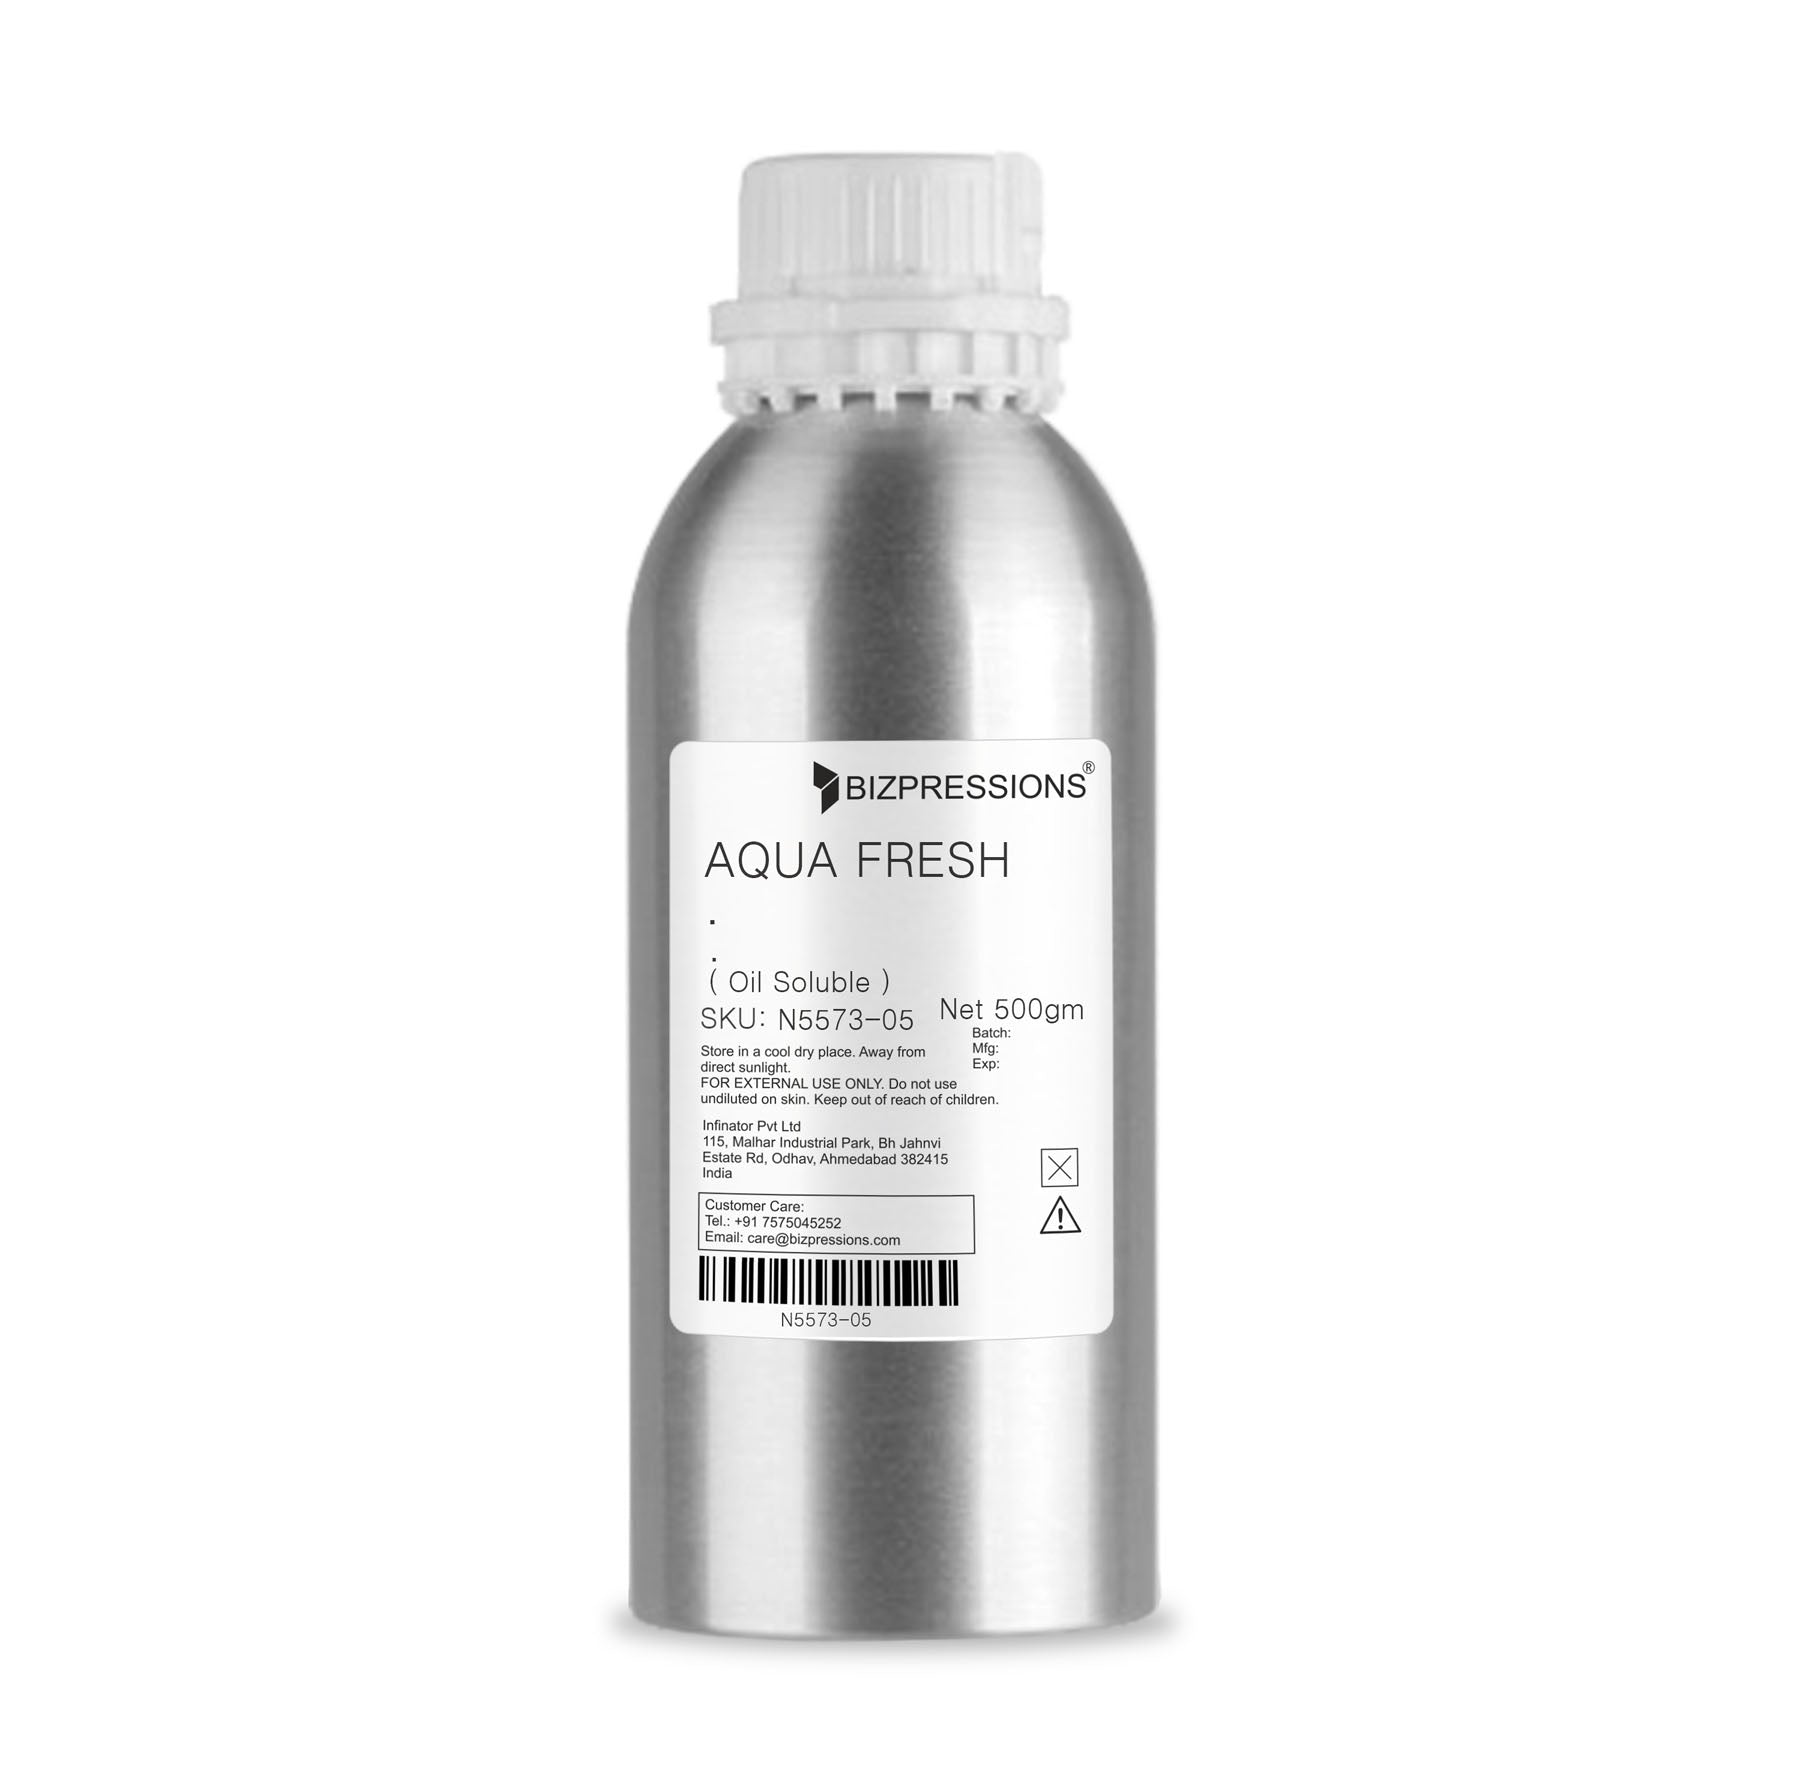 AQUA FRESH - Fragrance ( Oil Soluble ) - 500 gm